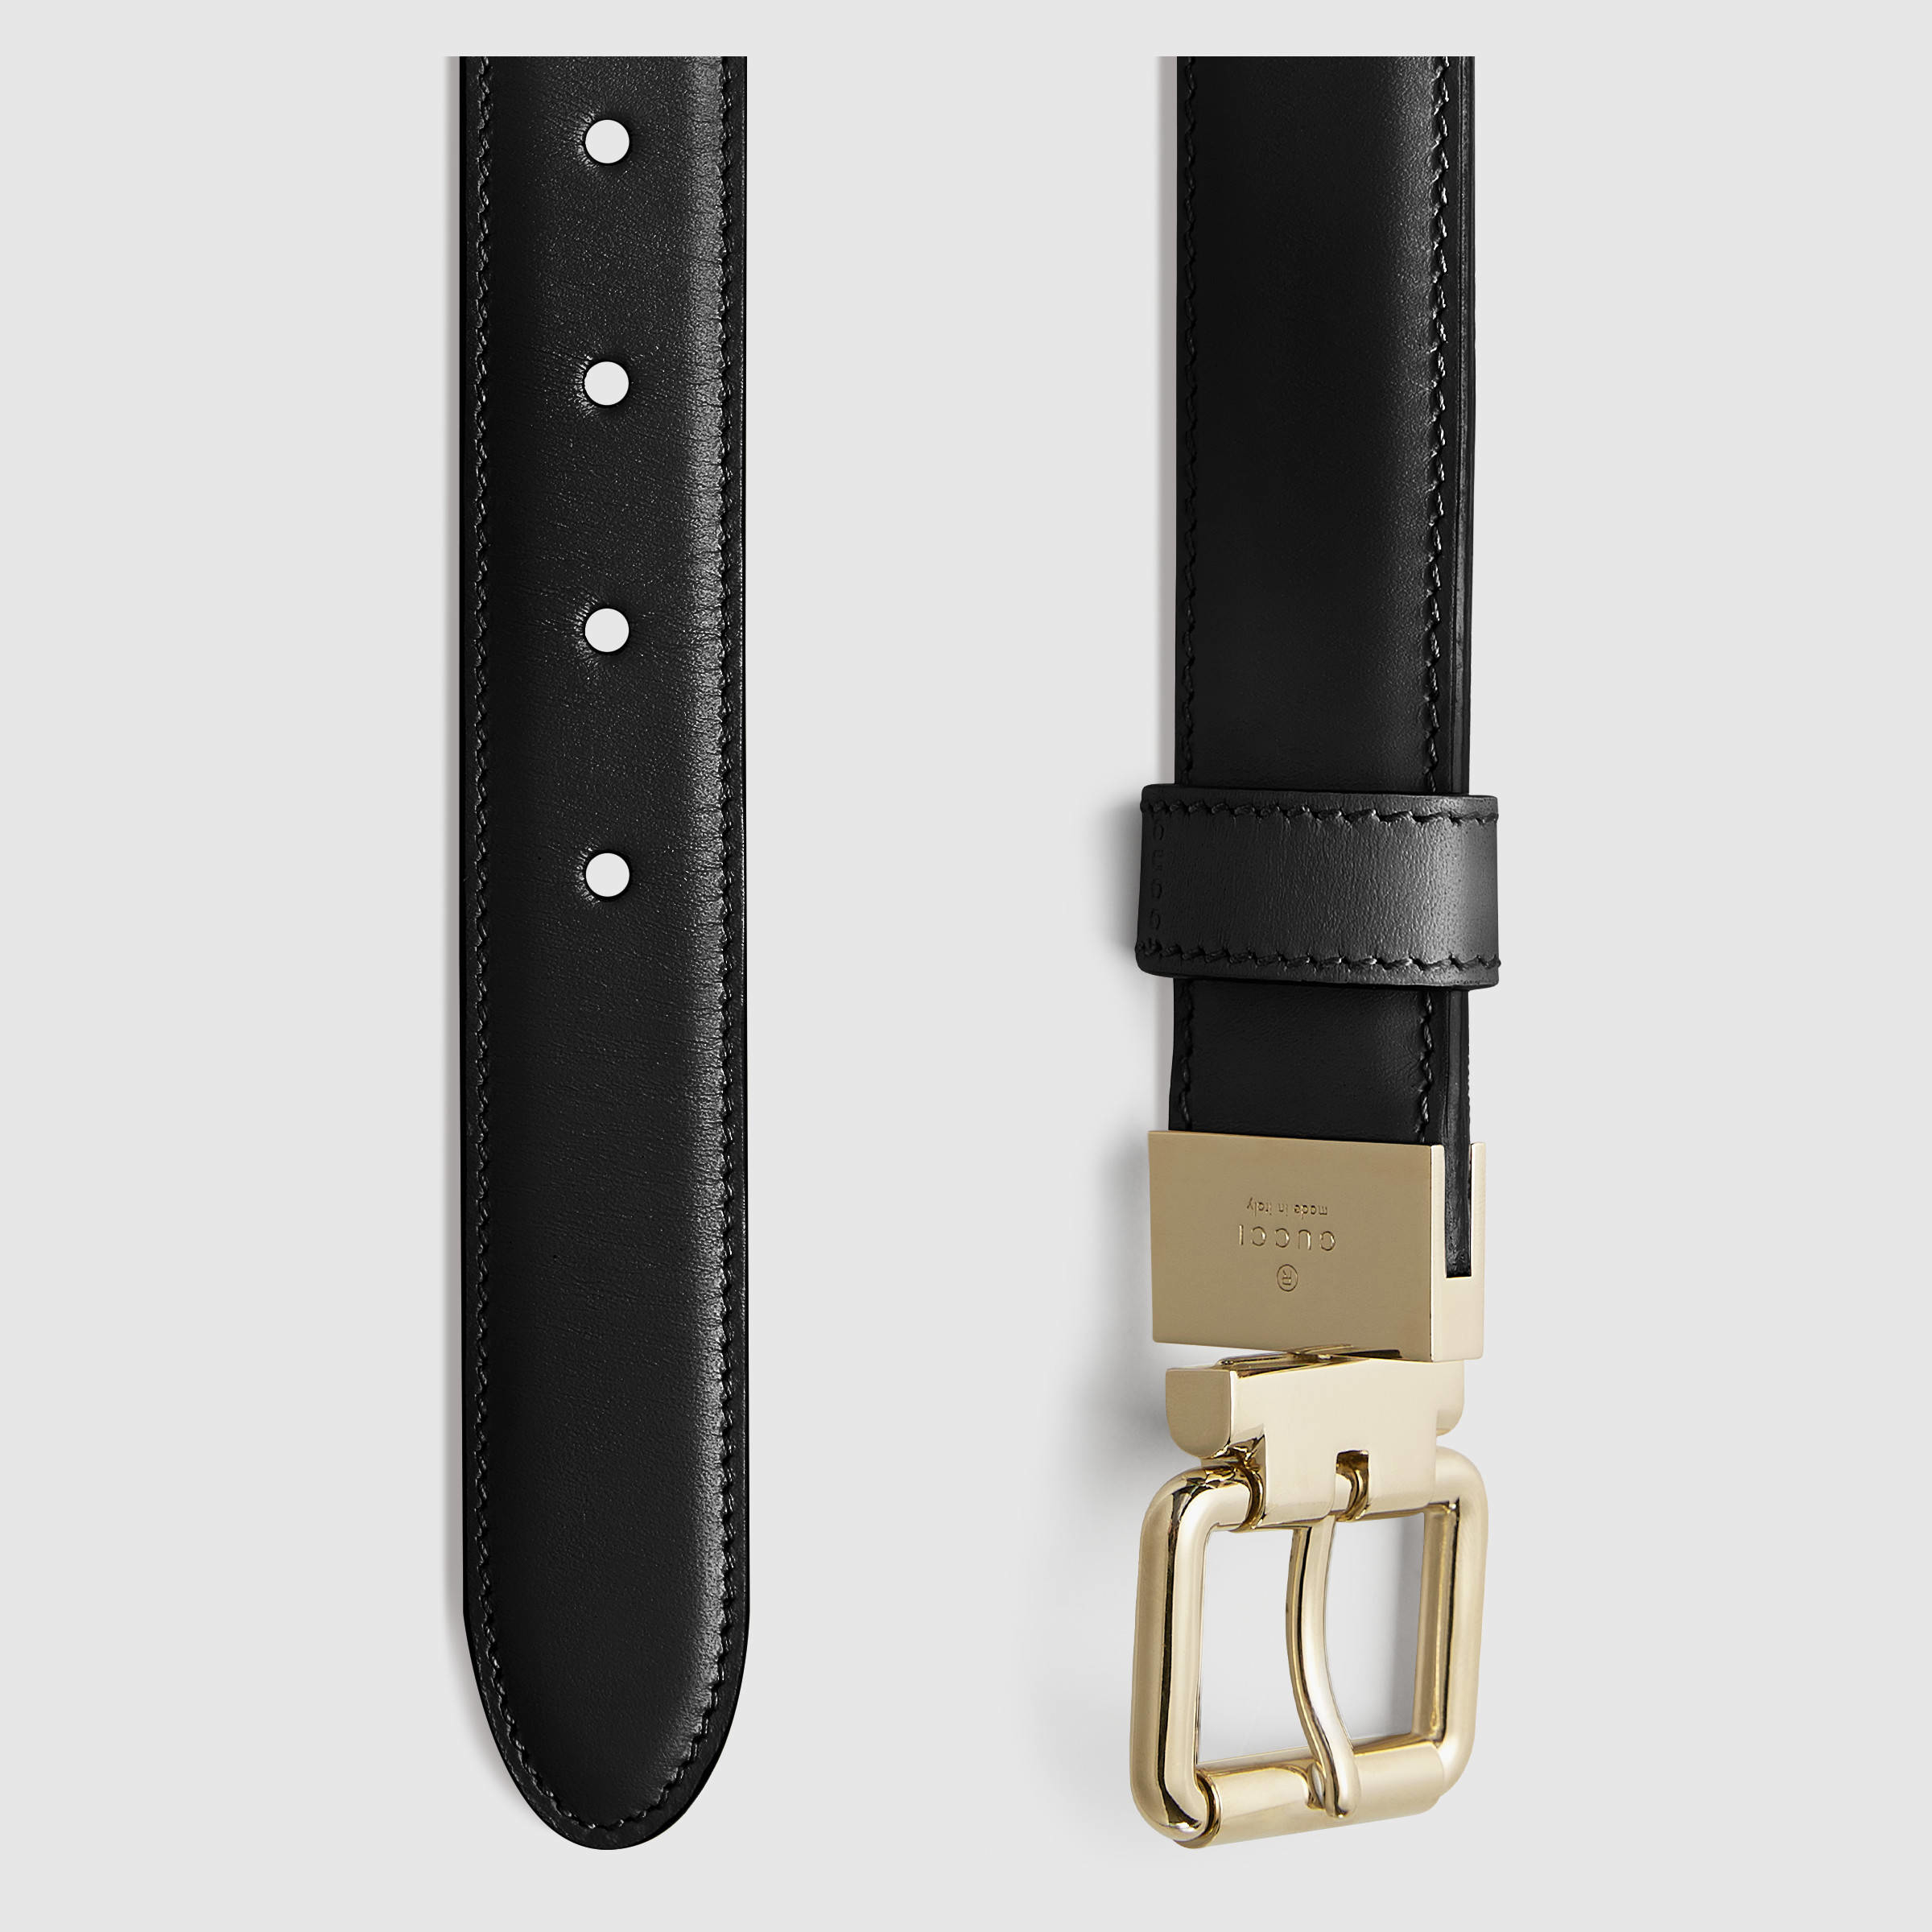 Gucci Reversible Leather Belt in Black for Men - Lyst